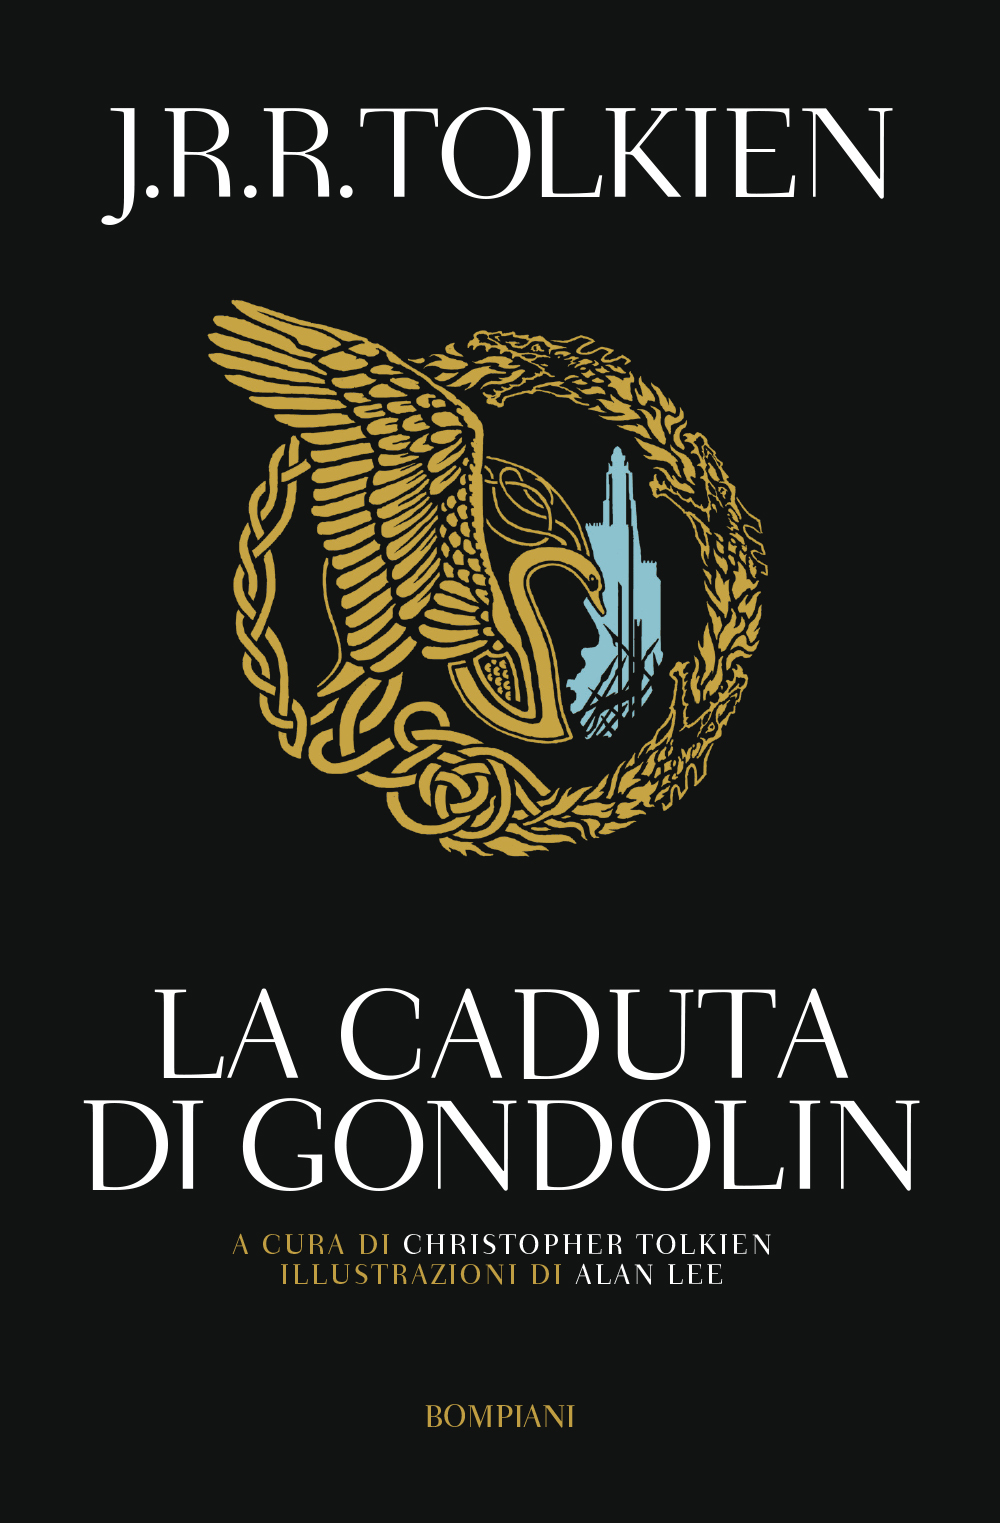 La caduta di Gondolin (Paperback, Italian language, 2019, Bompiani)